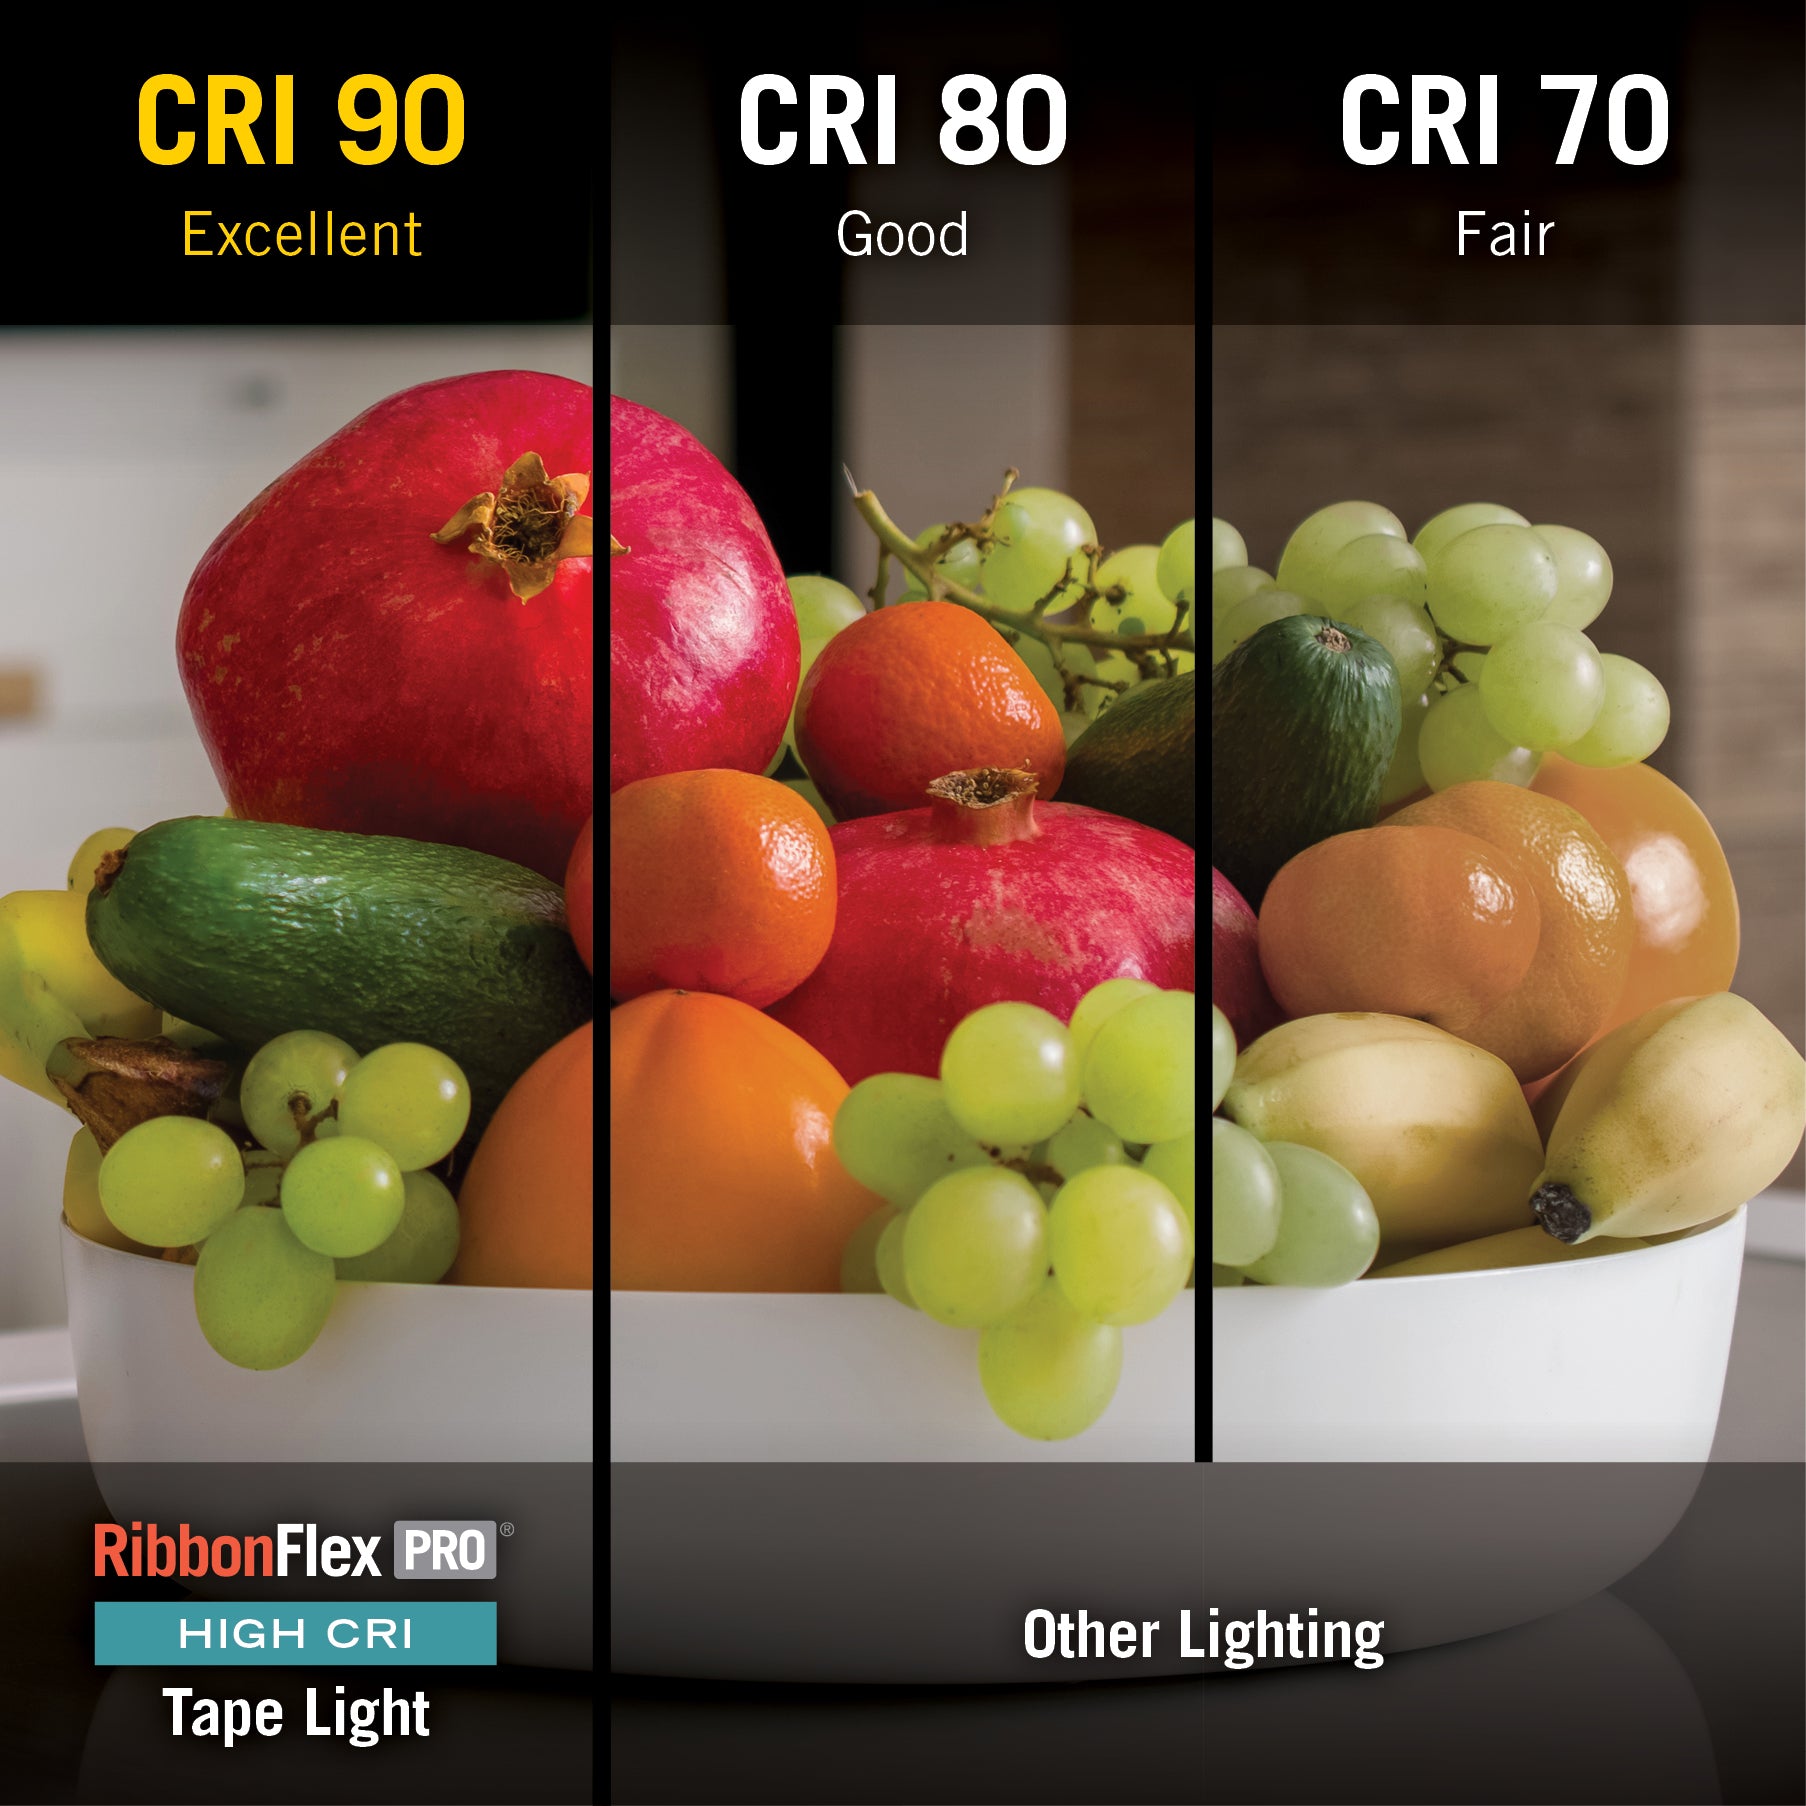 24V RGB LED Strip Light Tape 60 LED/m – Armacost Lighting